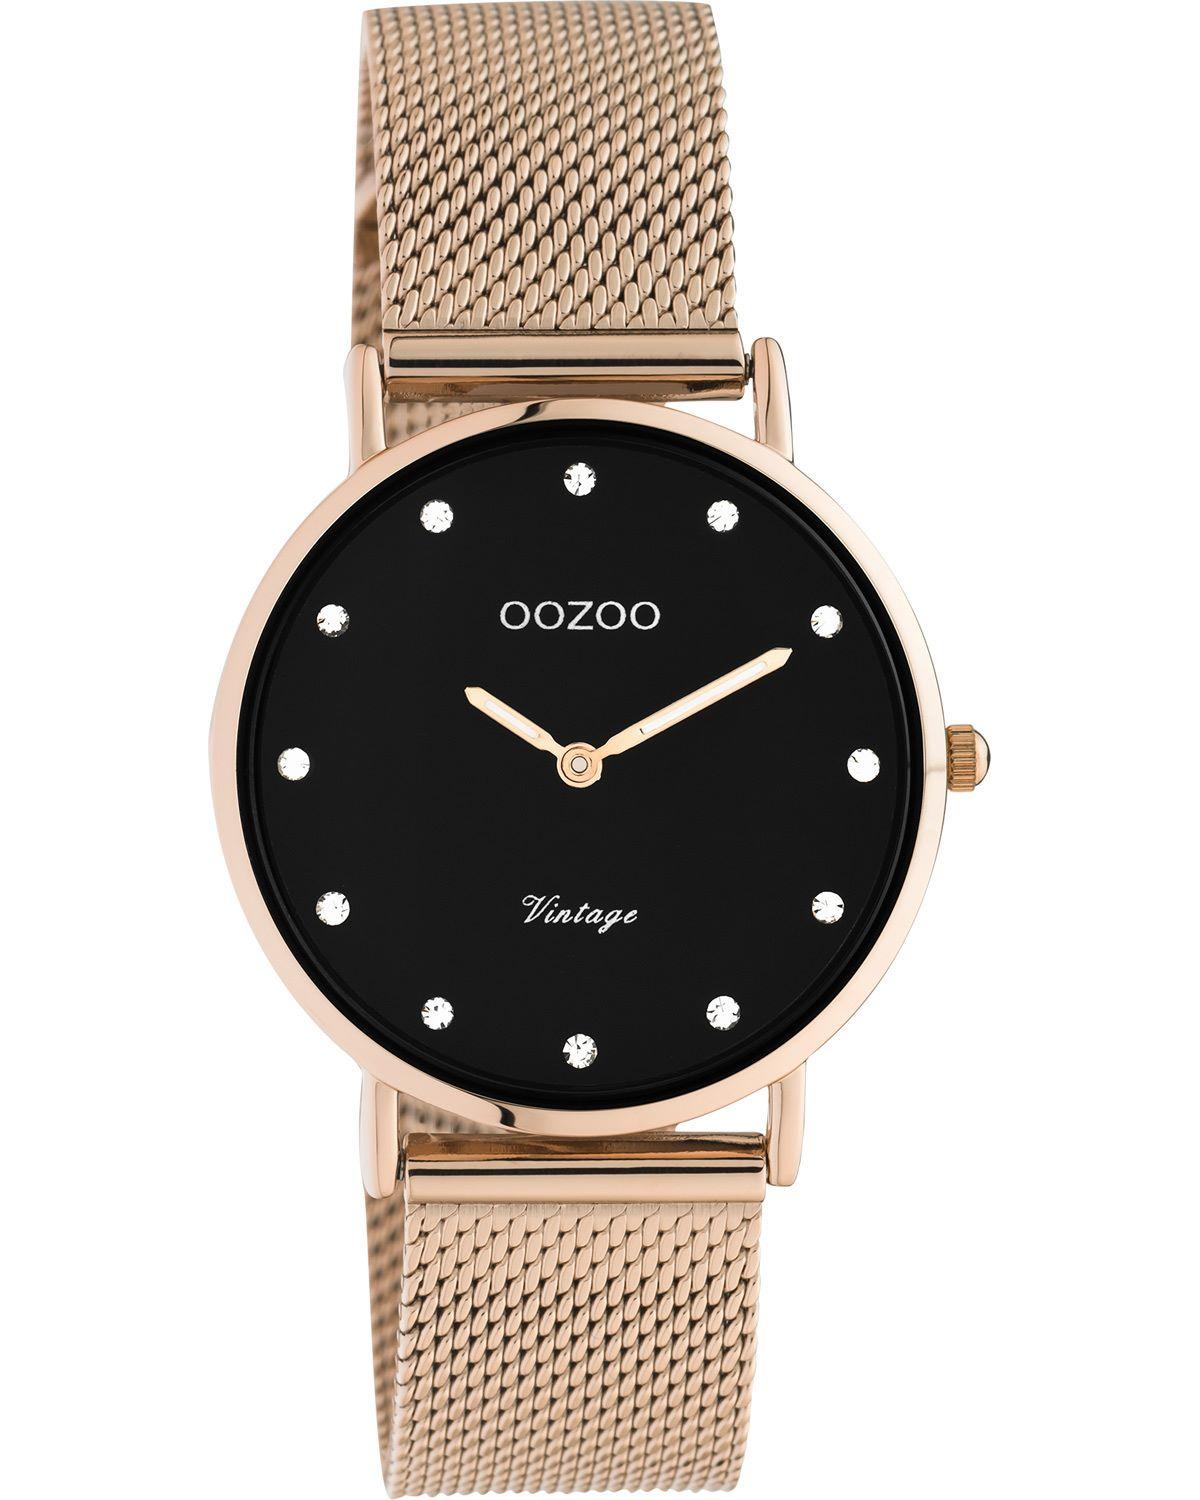 oozoo vintage c20244 rose gold case with stainless steel bracelet image1